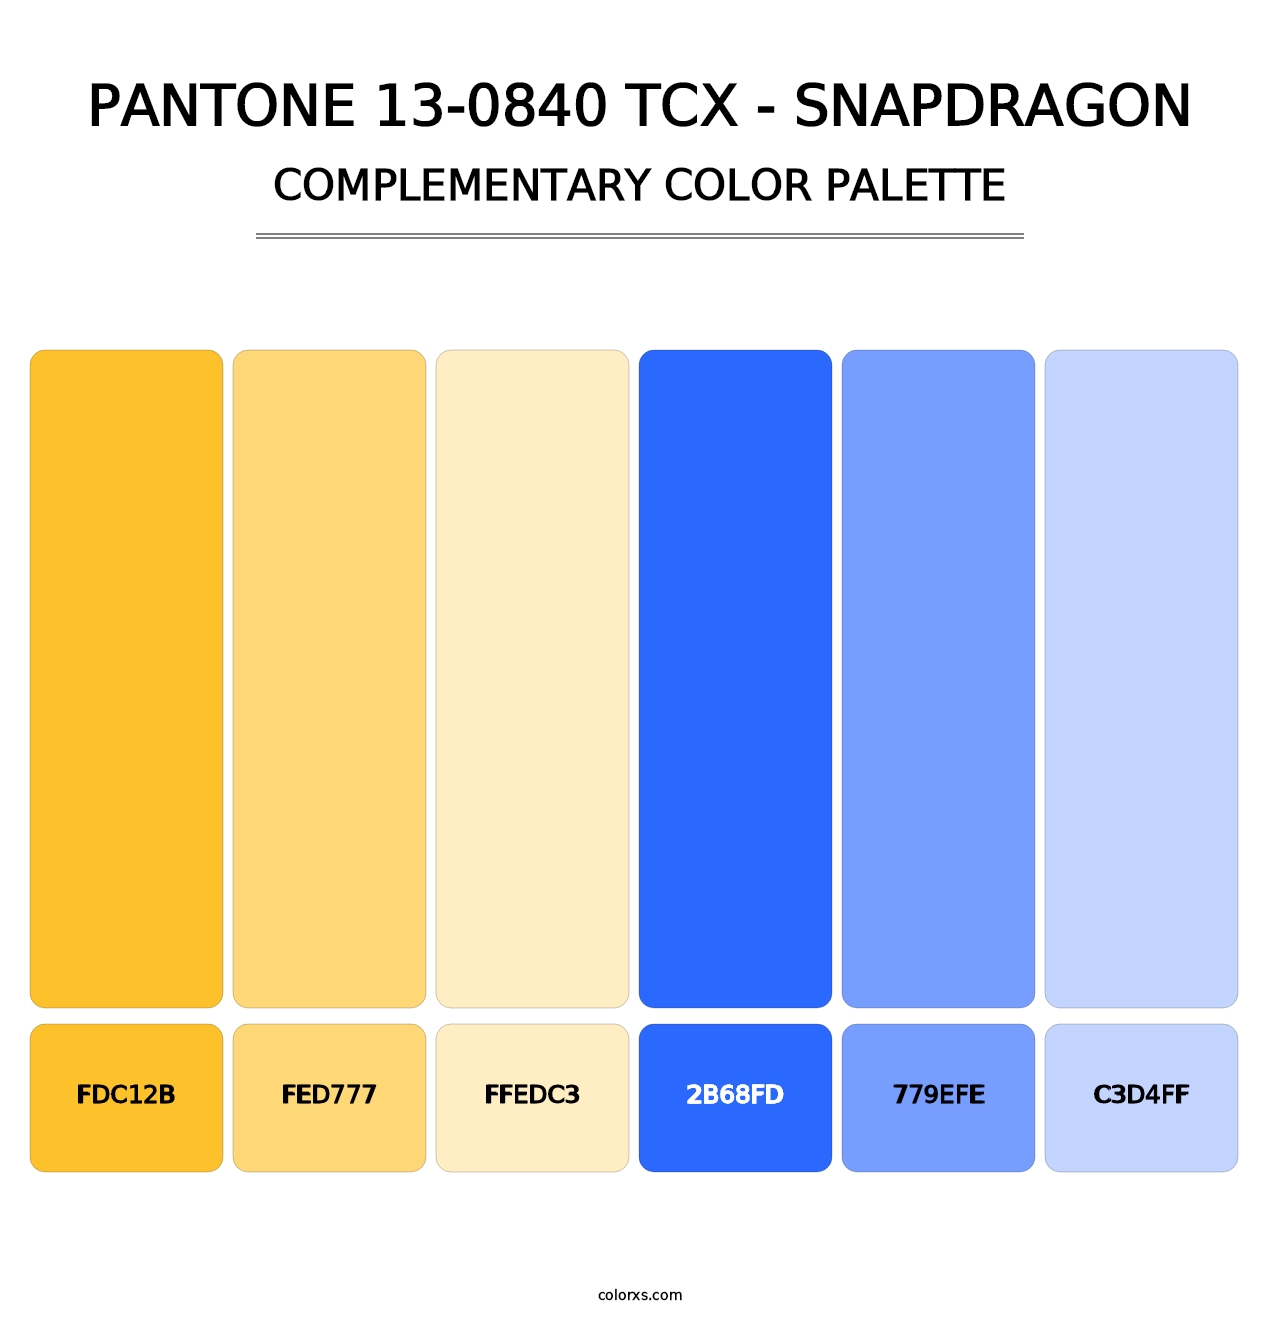 PANTONE 13-0840 TCX - Snapdragon - Complementary Color Palette